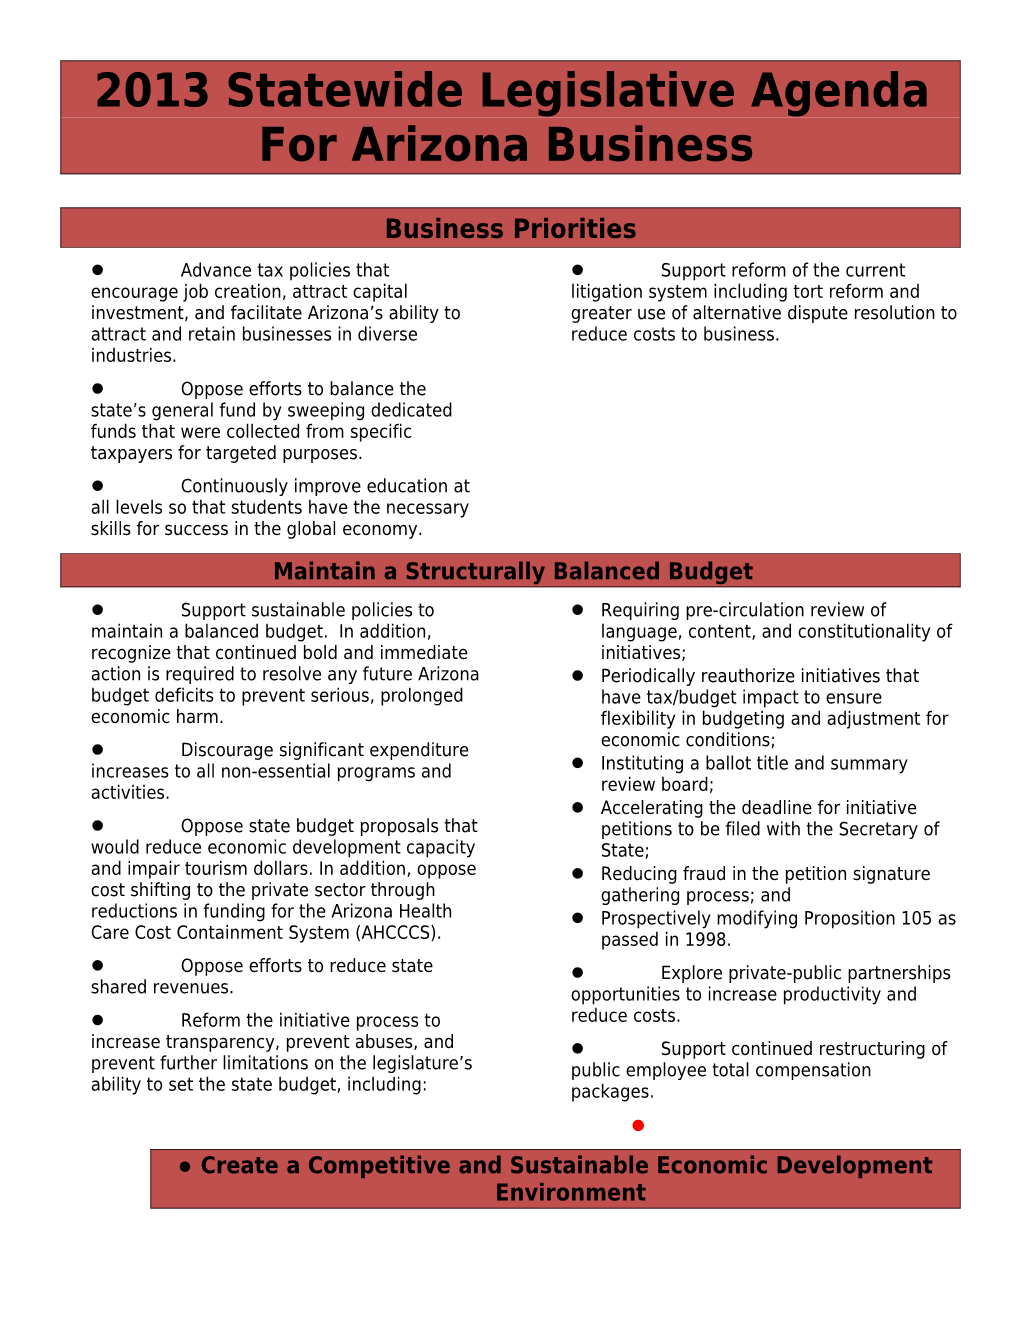 2013 Statewide Legislative Agenda for Arizona Business